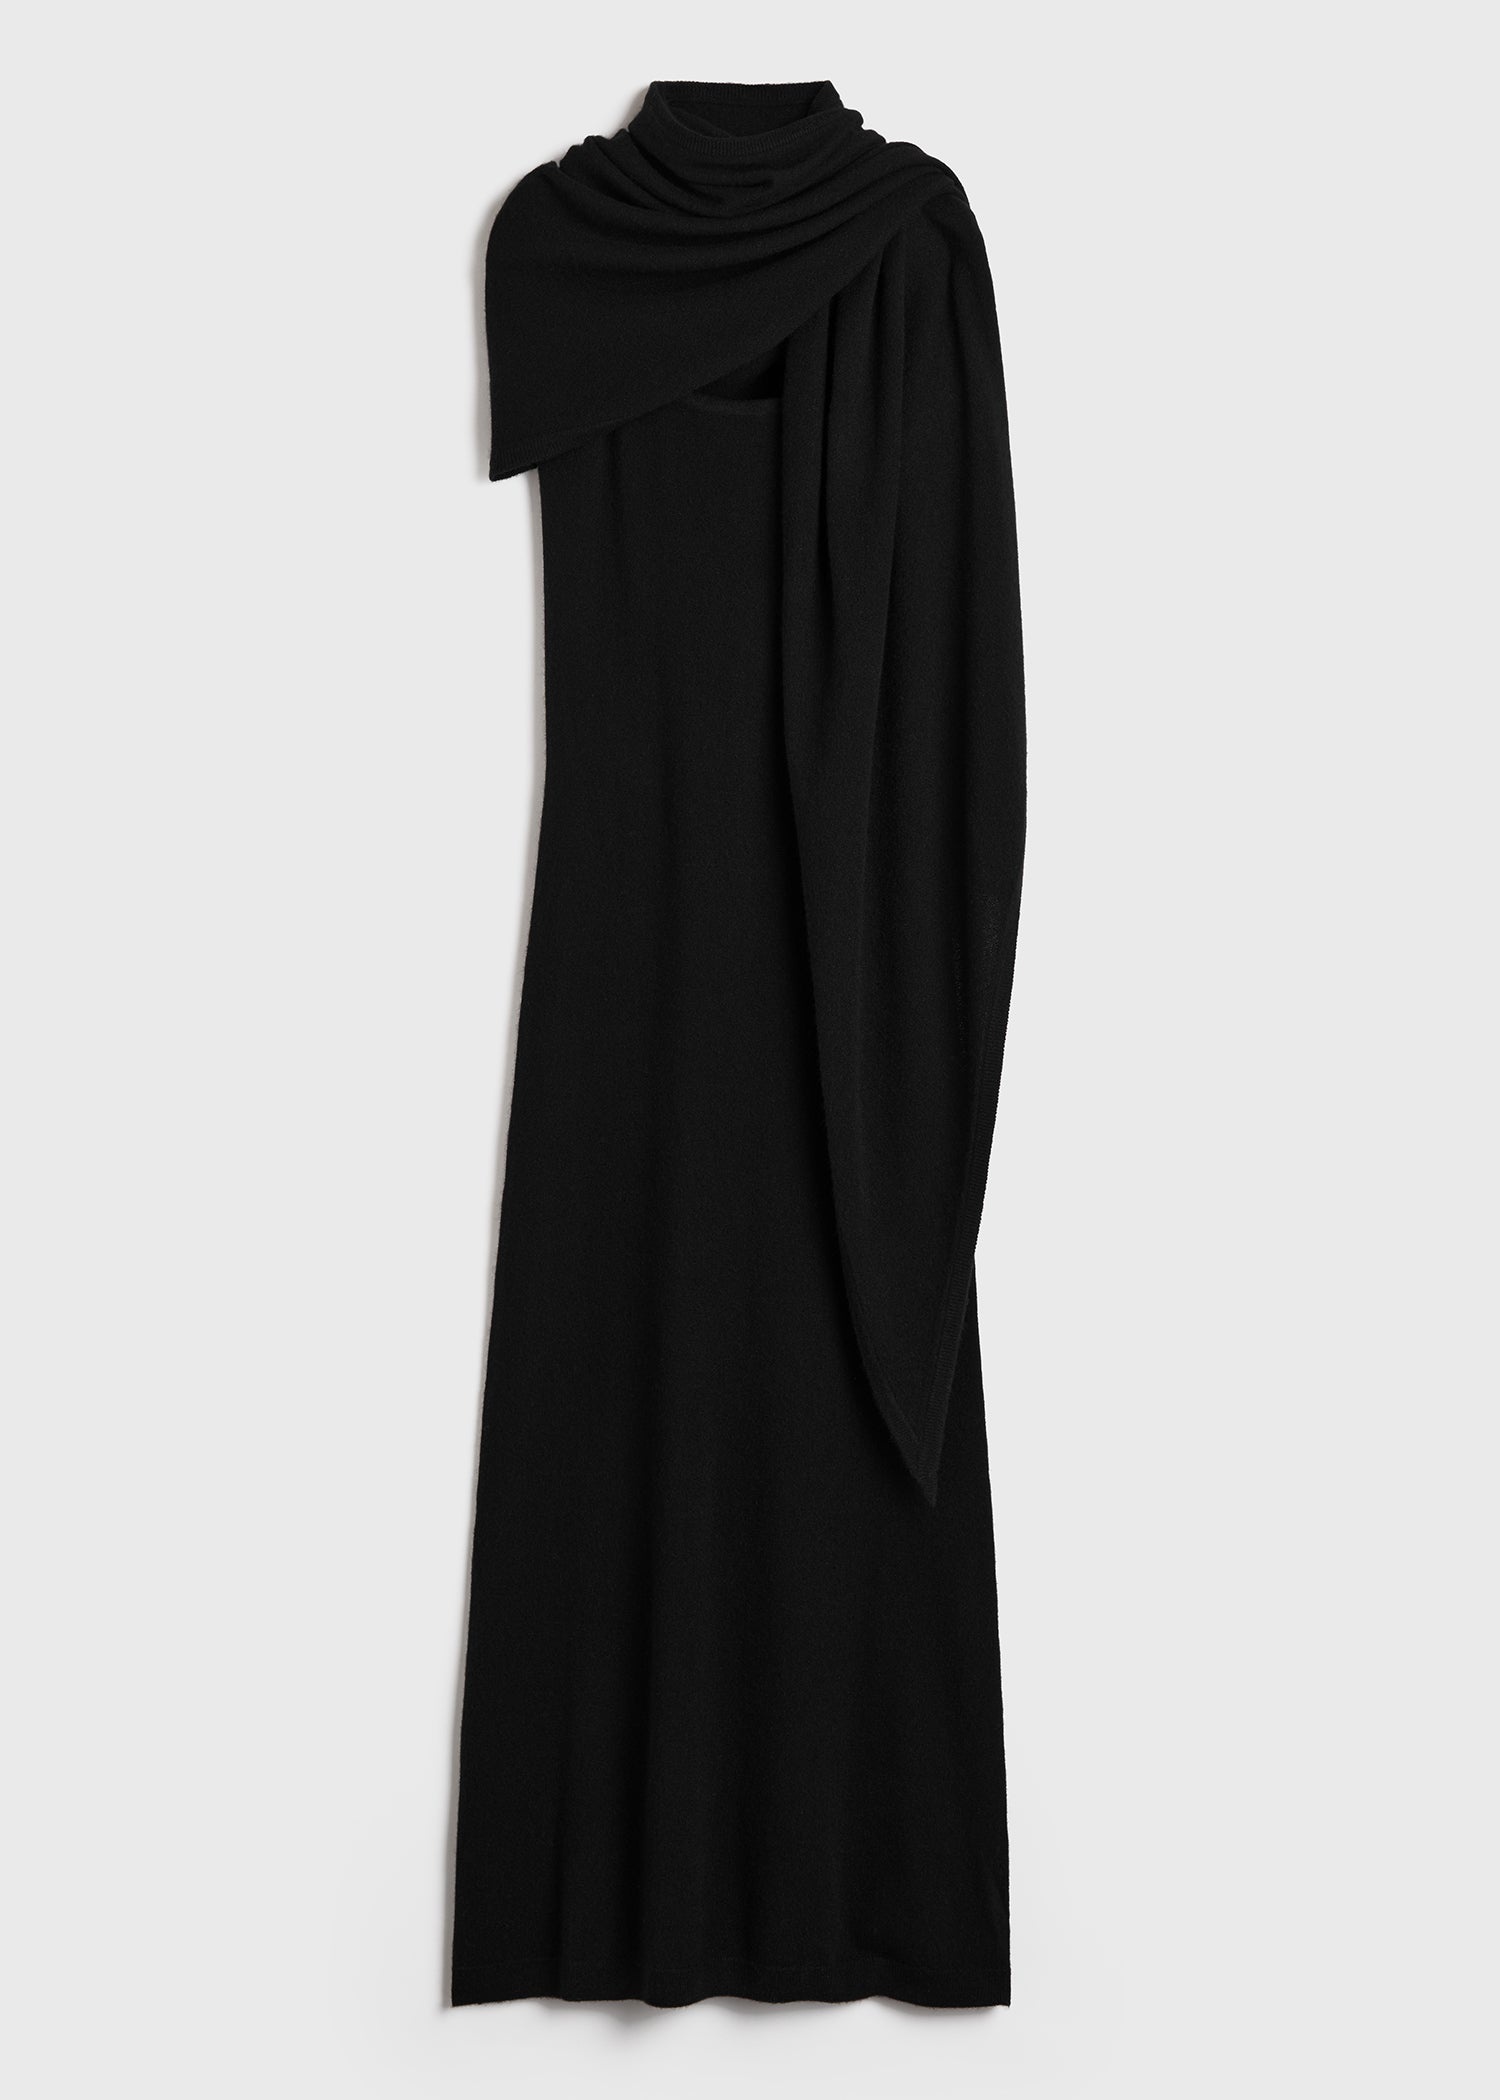 Cashmere shawl dress black - 1